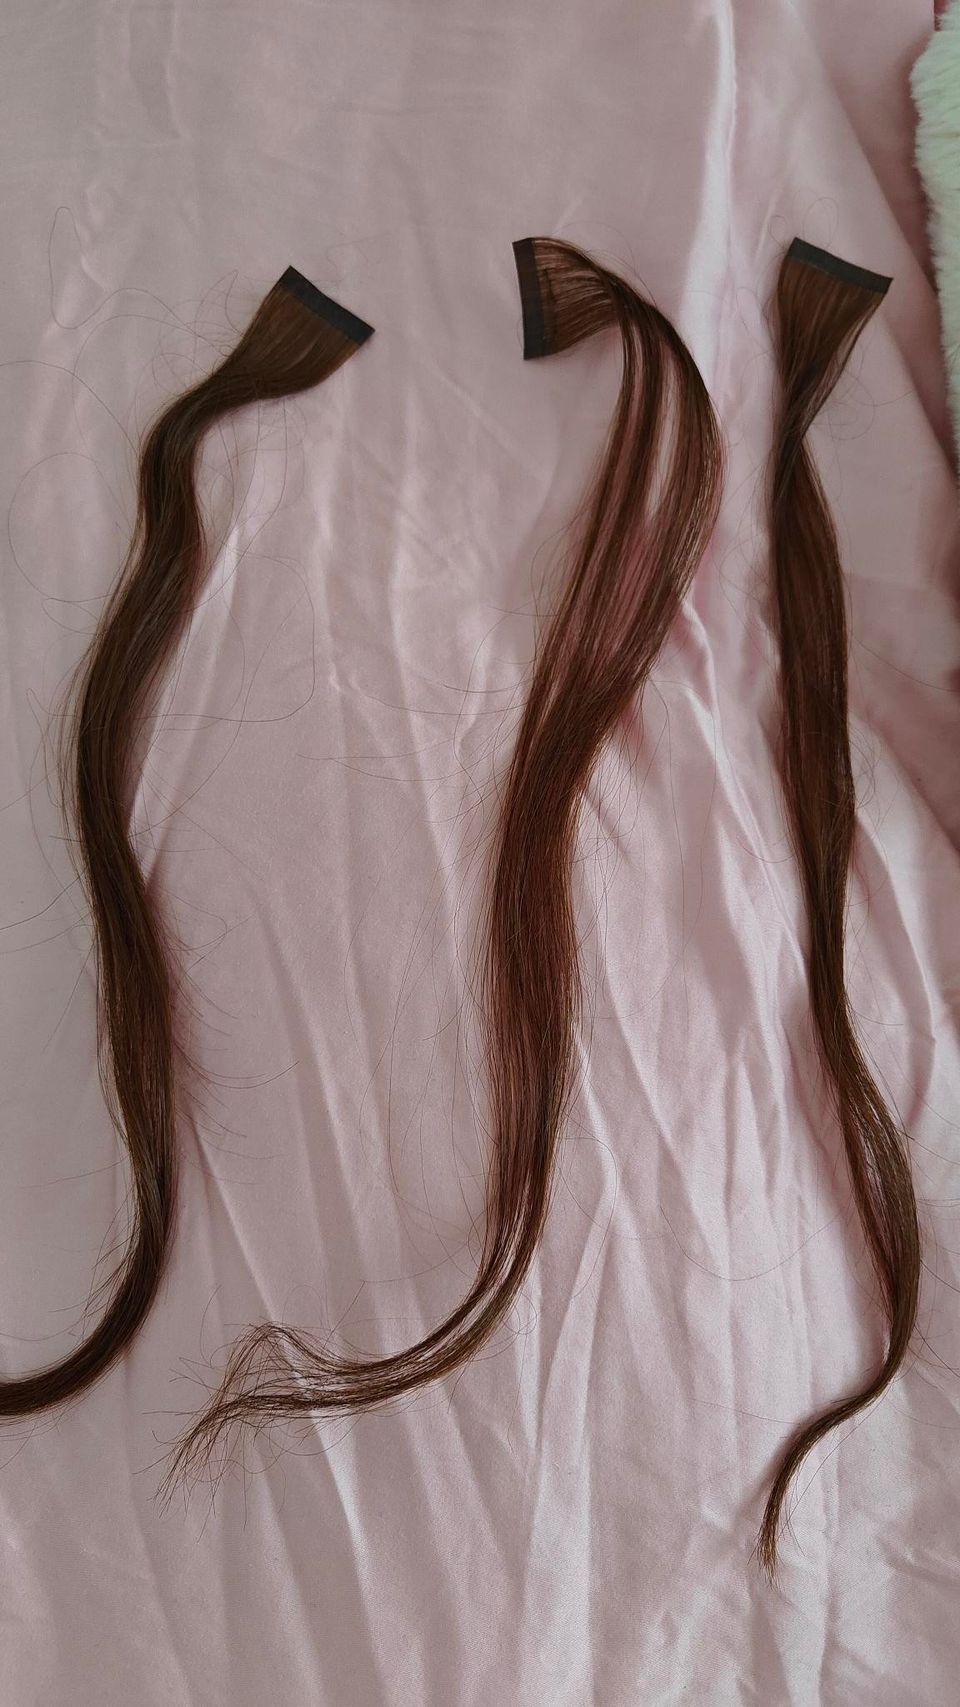 BPhair hiustenpidennykset (44cm, 12 paria, väri ruskea, ovh 700e!)